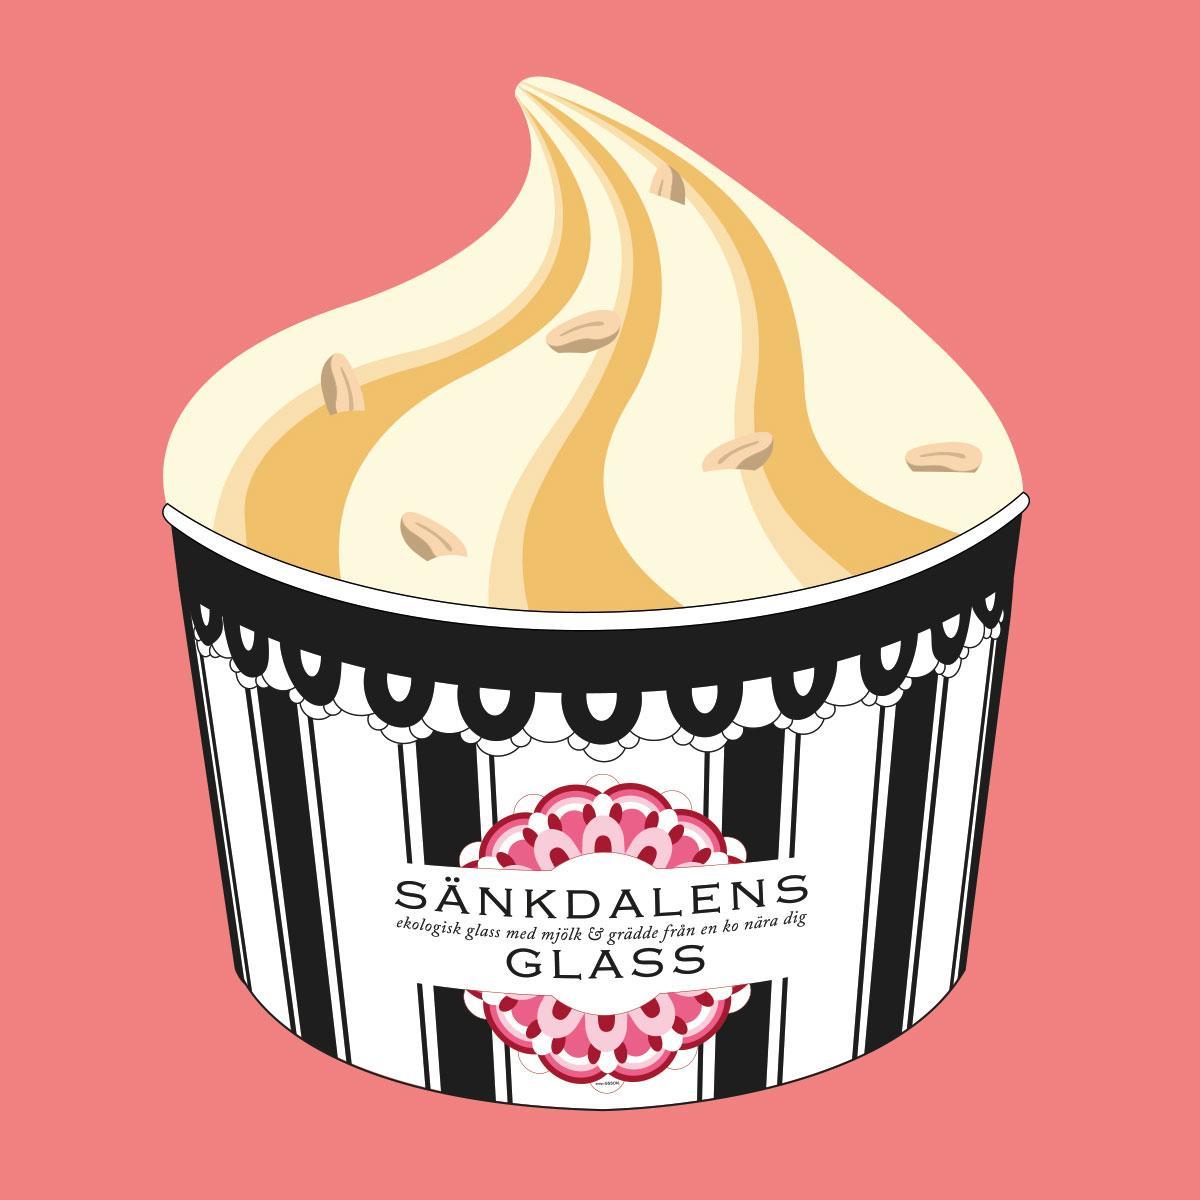 Sänkdalens glass's Peanut School Ice Cream'